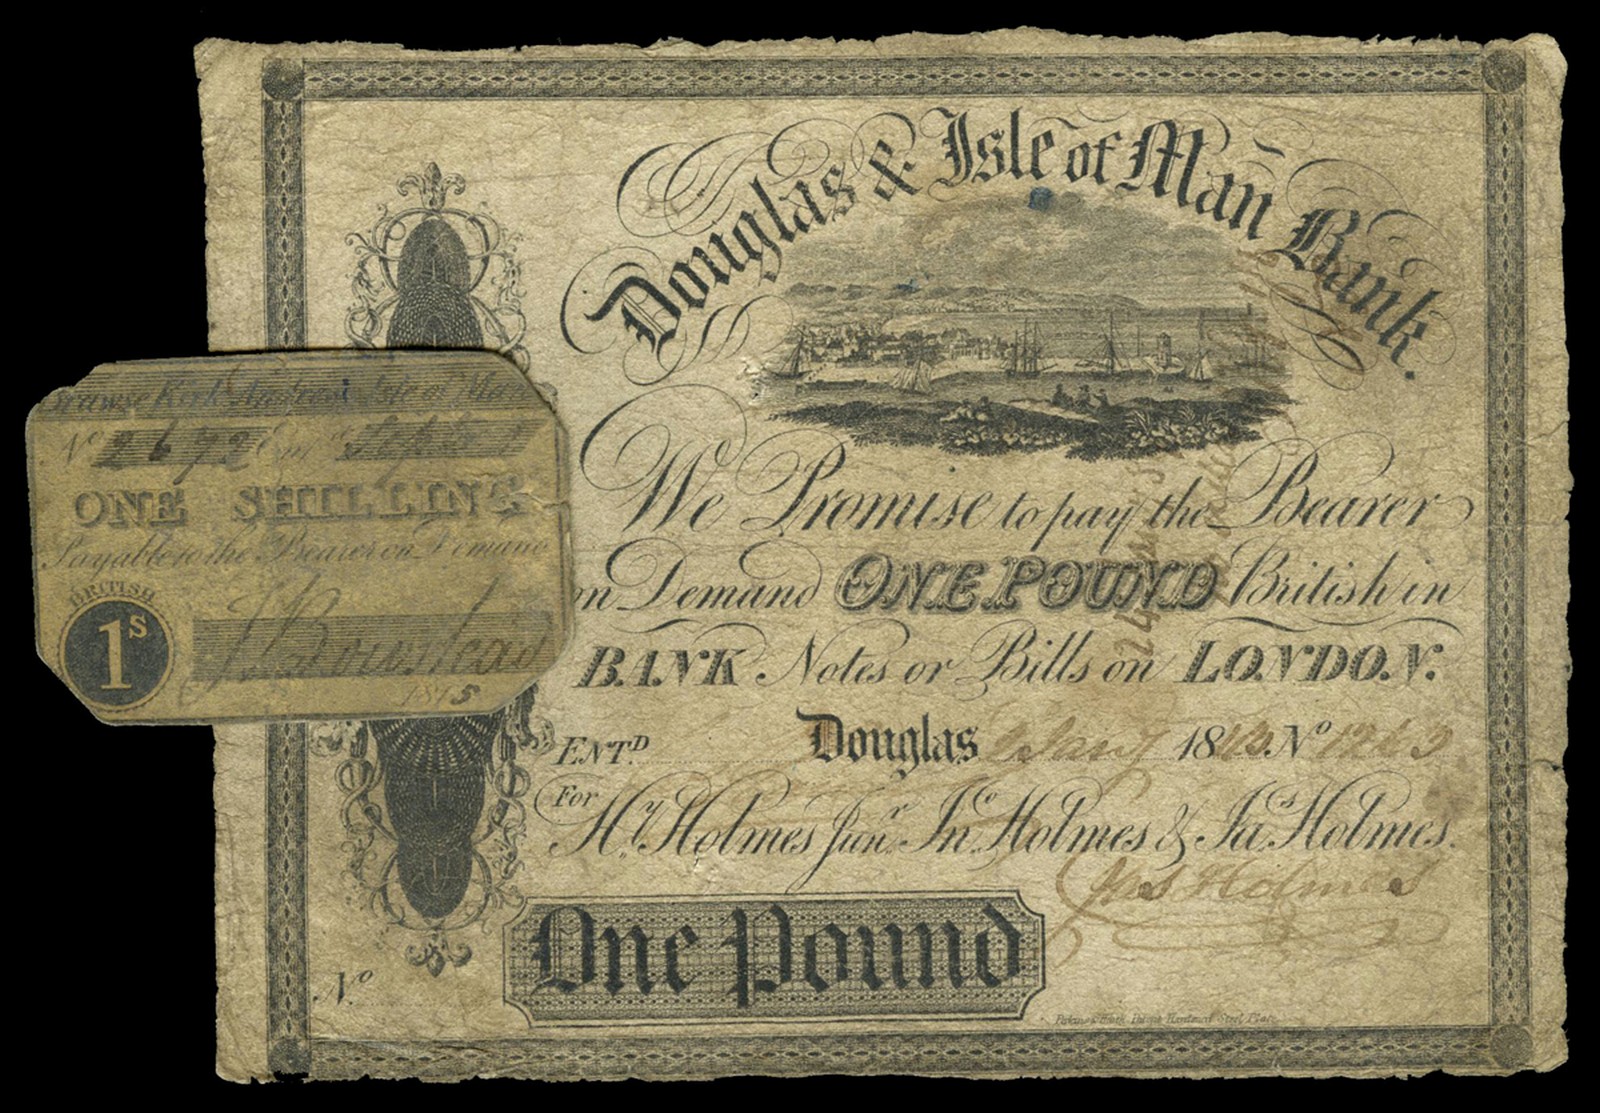 BRITISH BANKNOTES, Isle of Man, John Bowstead, One Shilling, 6 September 1815, no. 2672, card